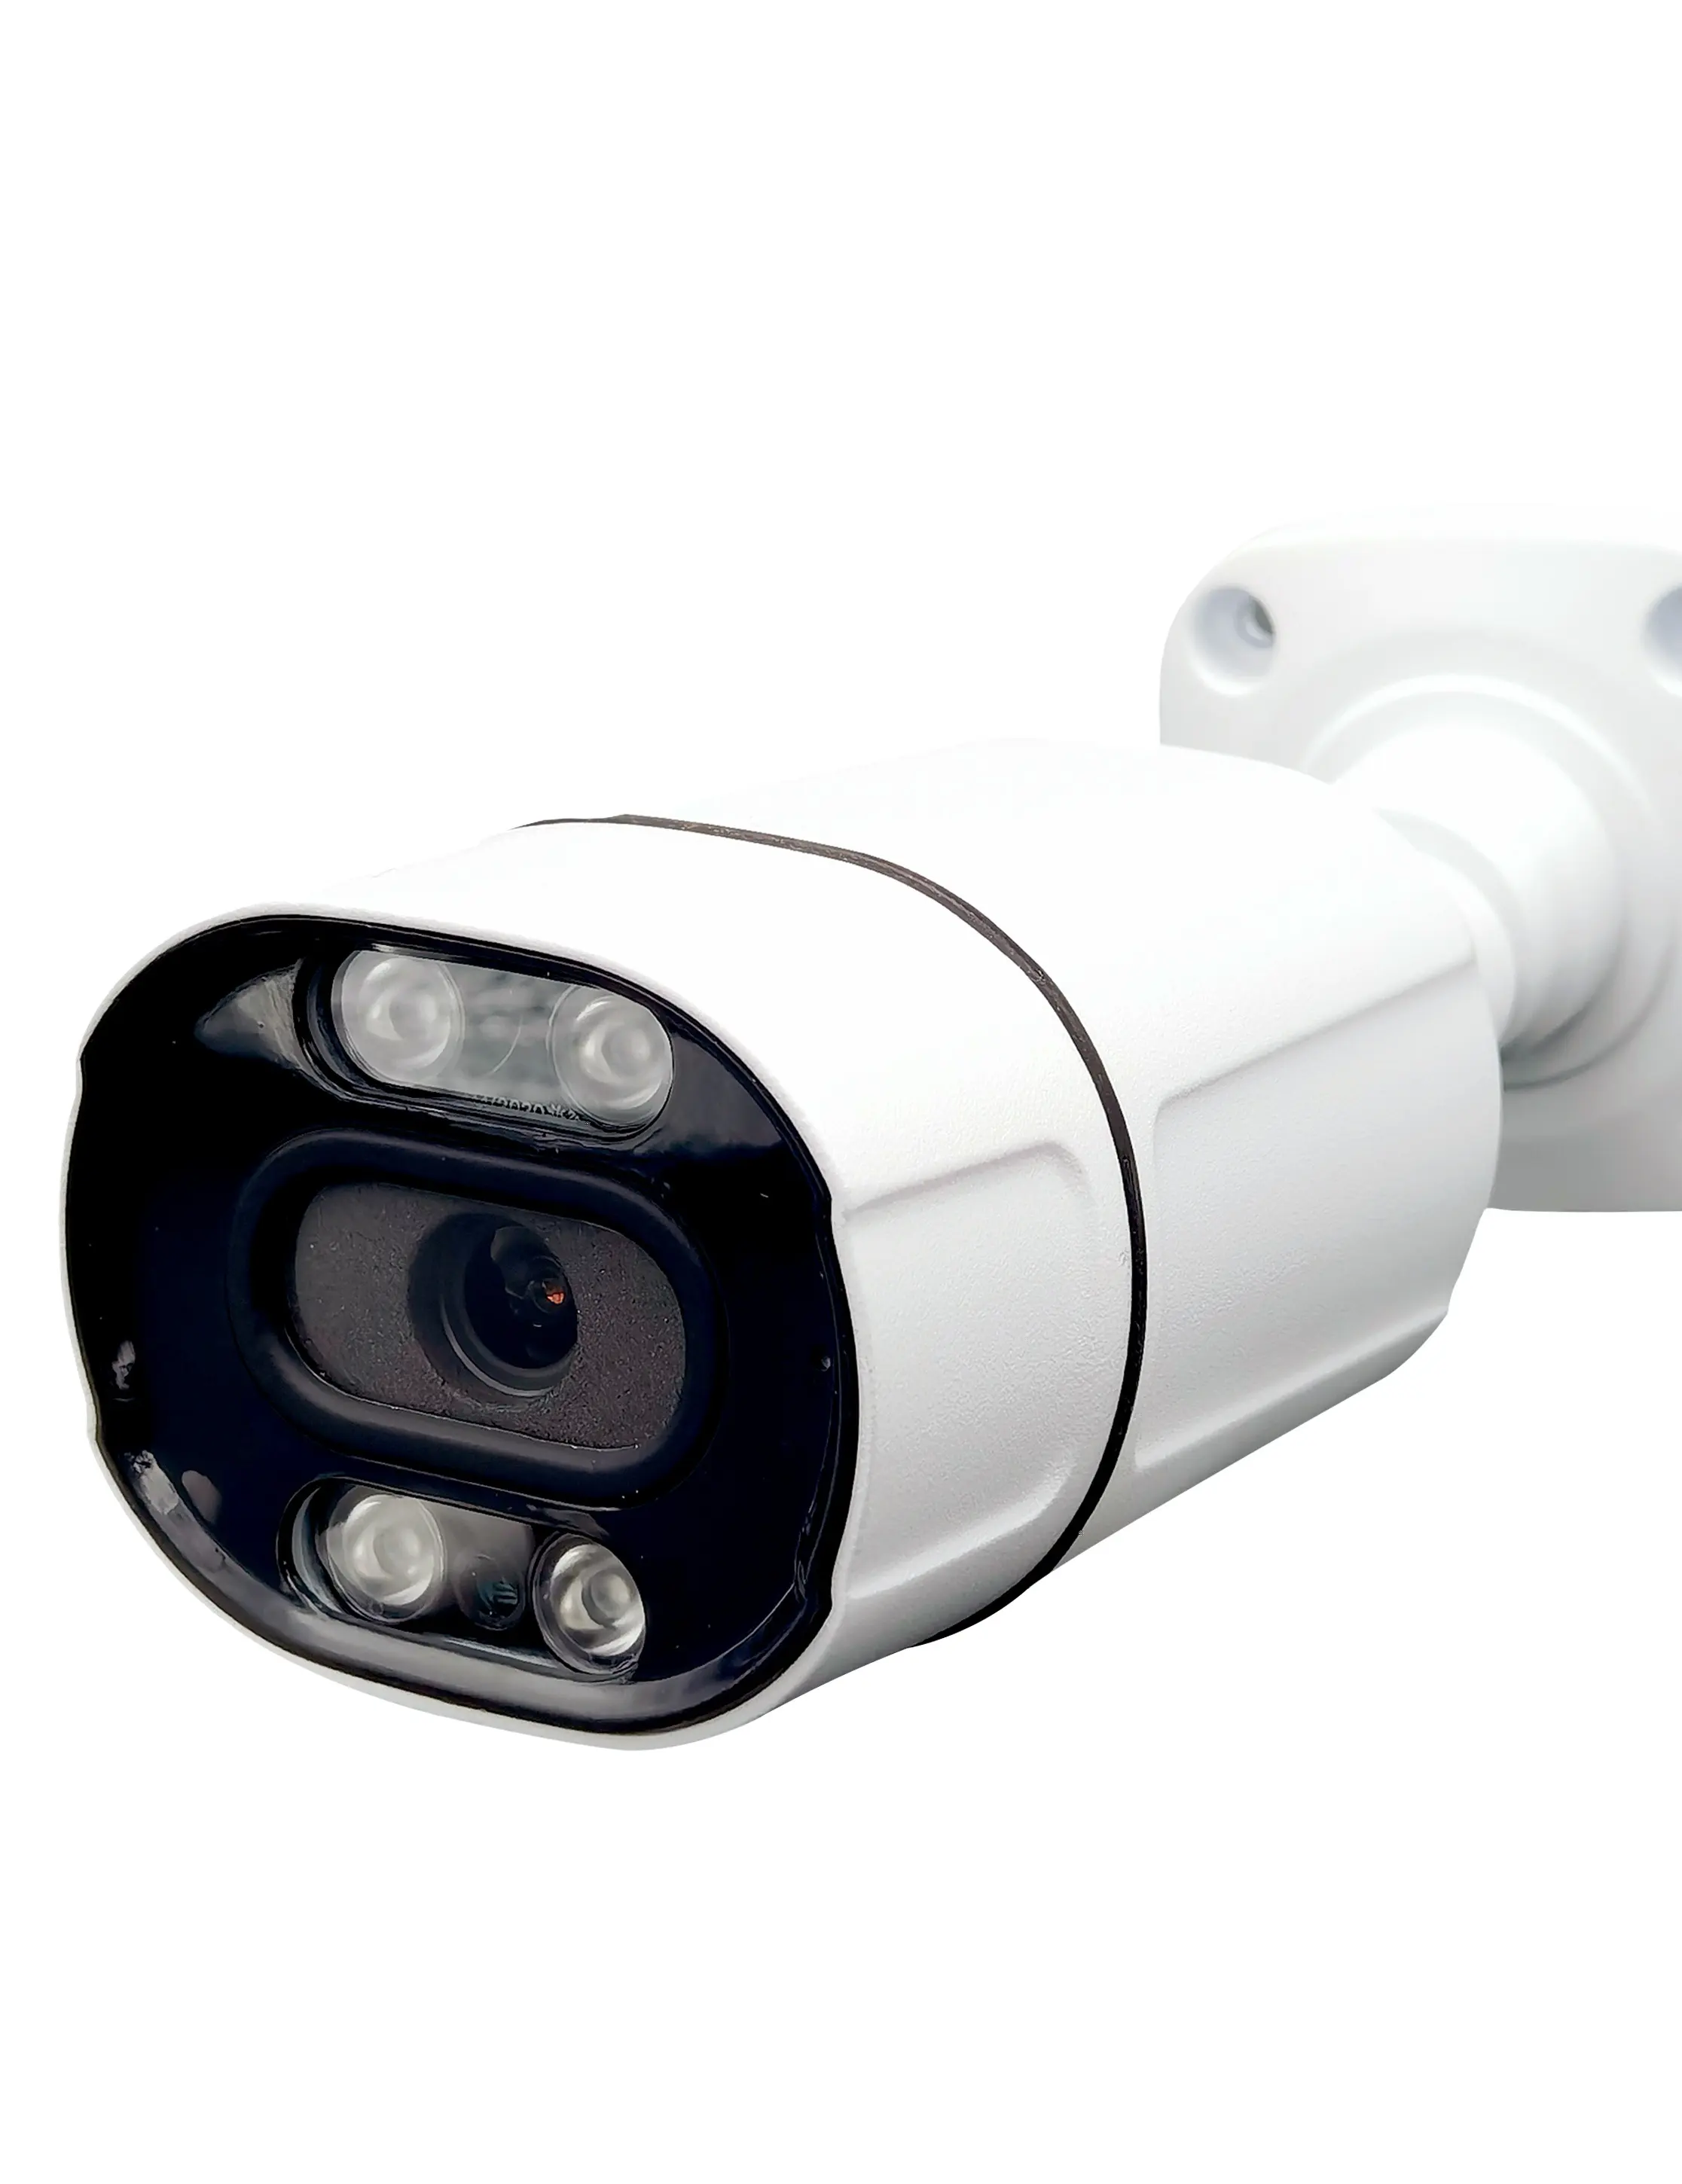 Light Night Vision CCTV Security Monitoring System POE Network Camera Ip66 Waterproof 4MP HD Black Bullet Camera Nvr Hikvision